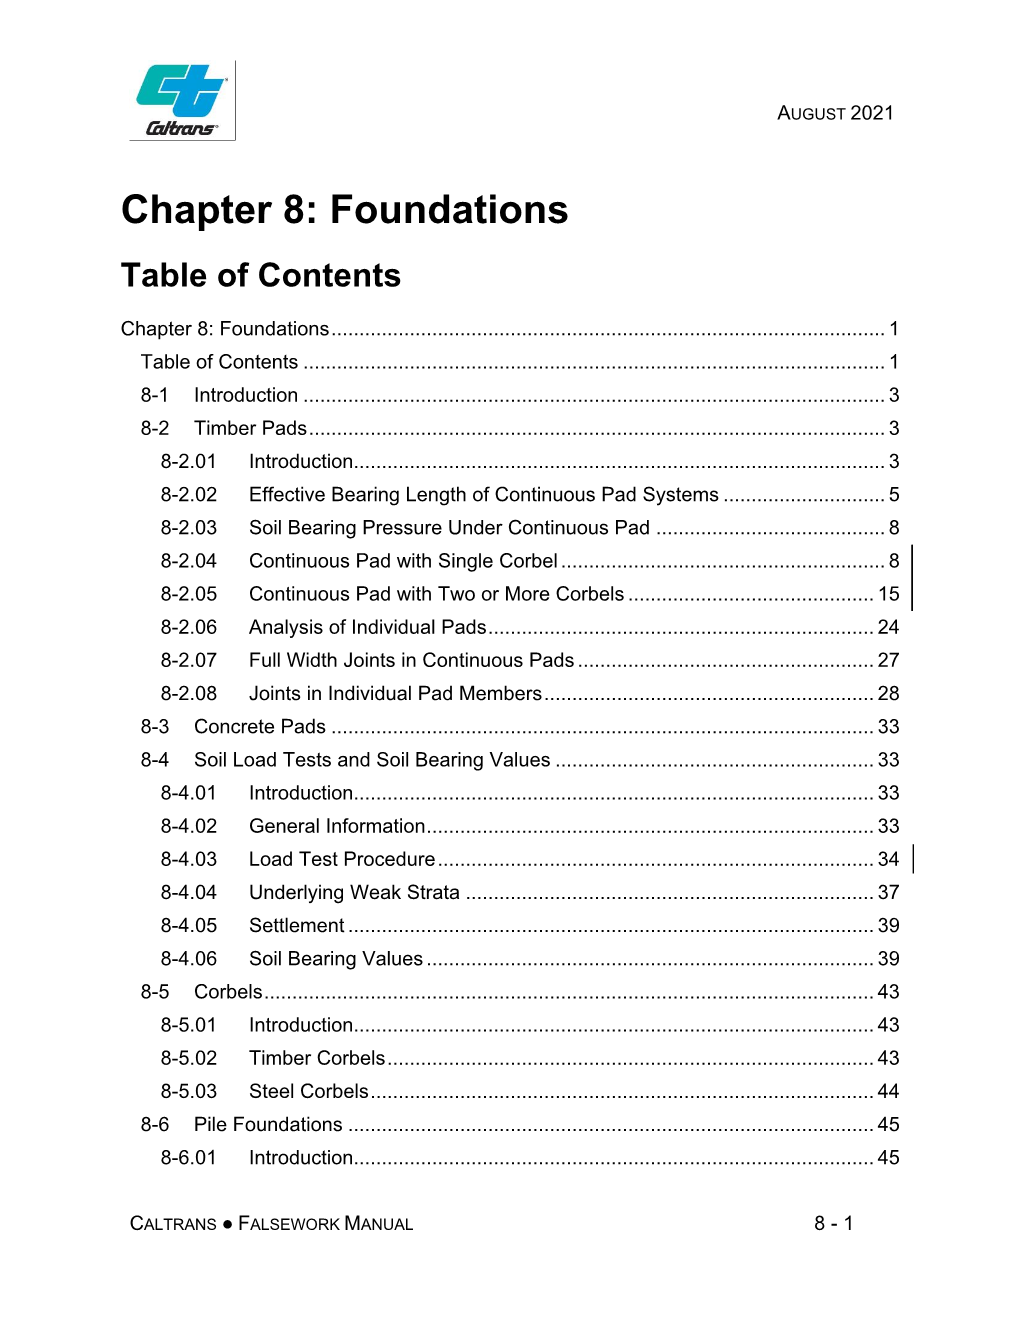 Falsework Manual Chapter 8, Foundation